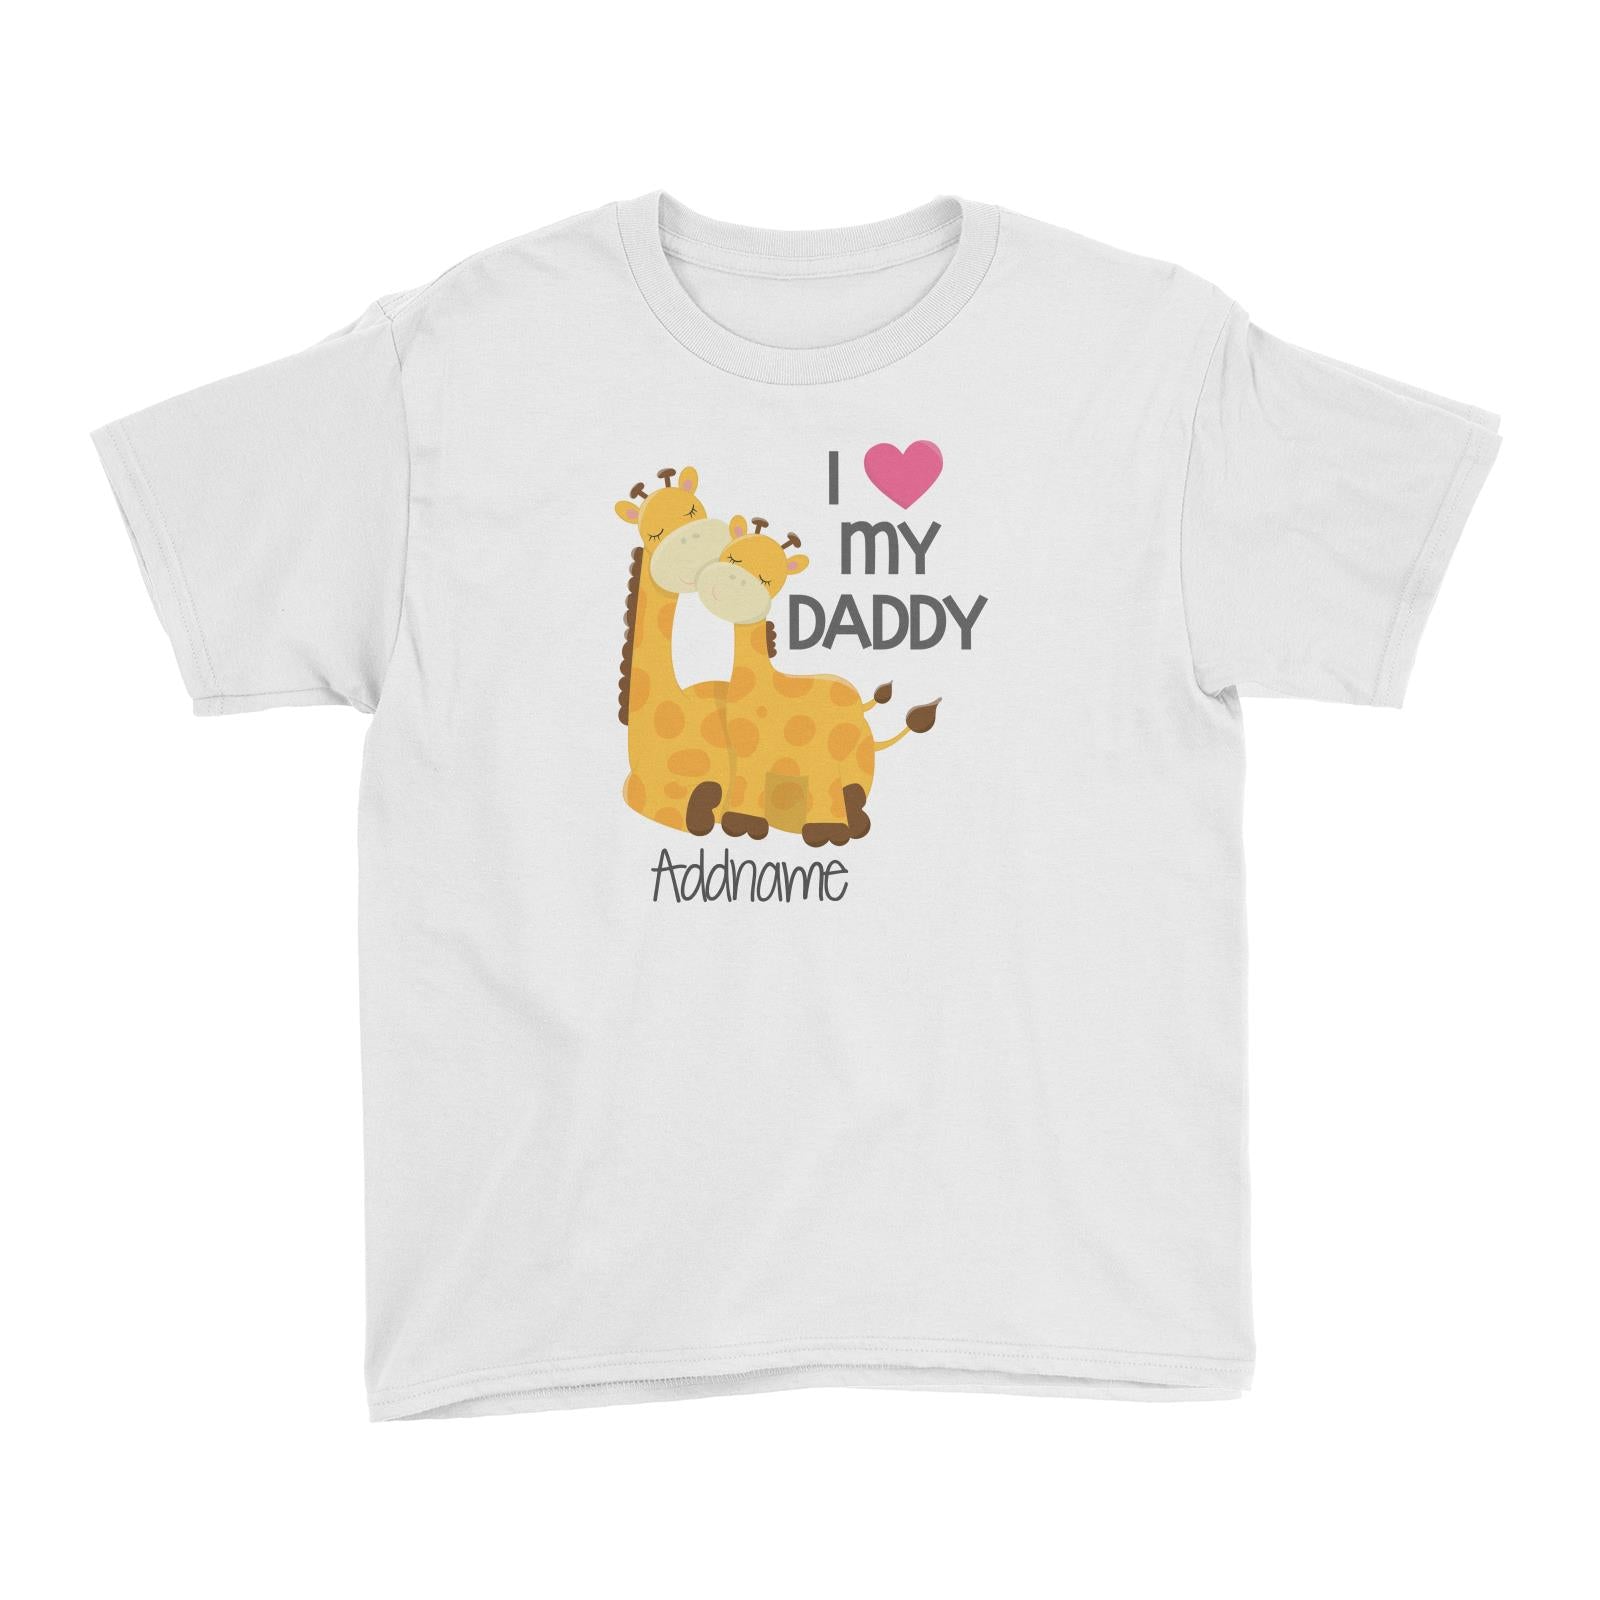 Animal &Loved Ones Giraffe I Love My Daddy Addname Kid's T-Shirt